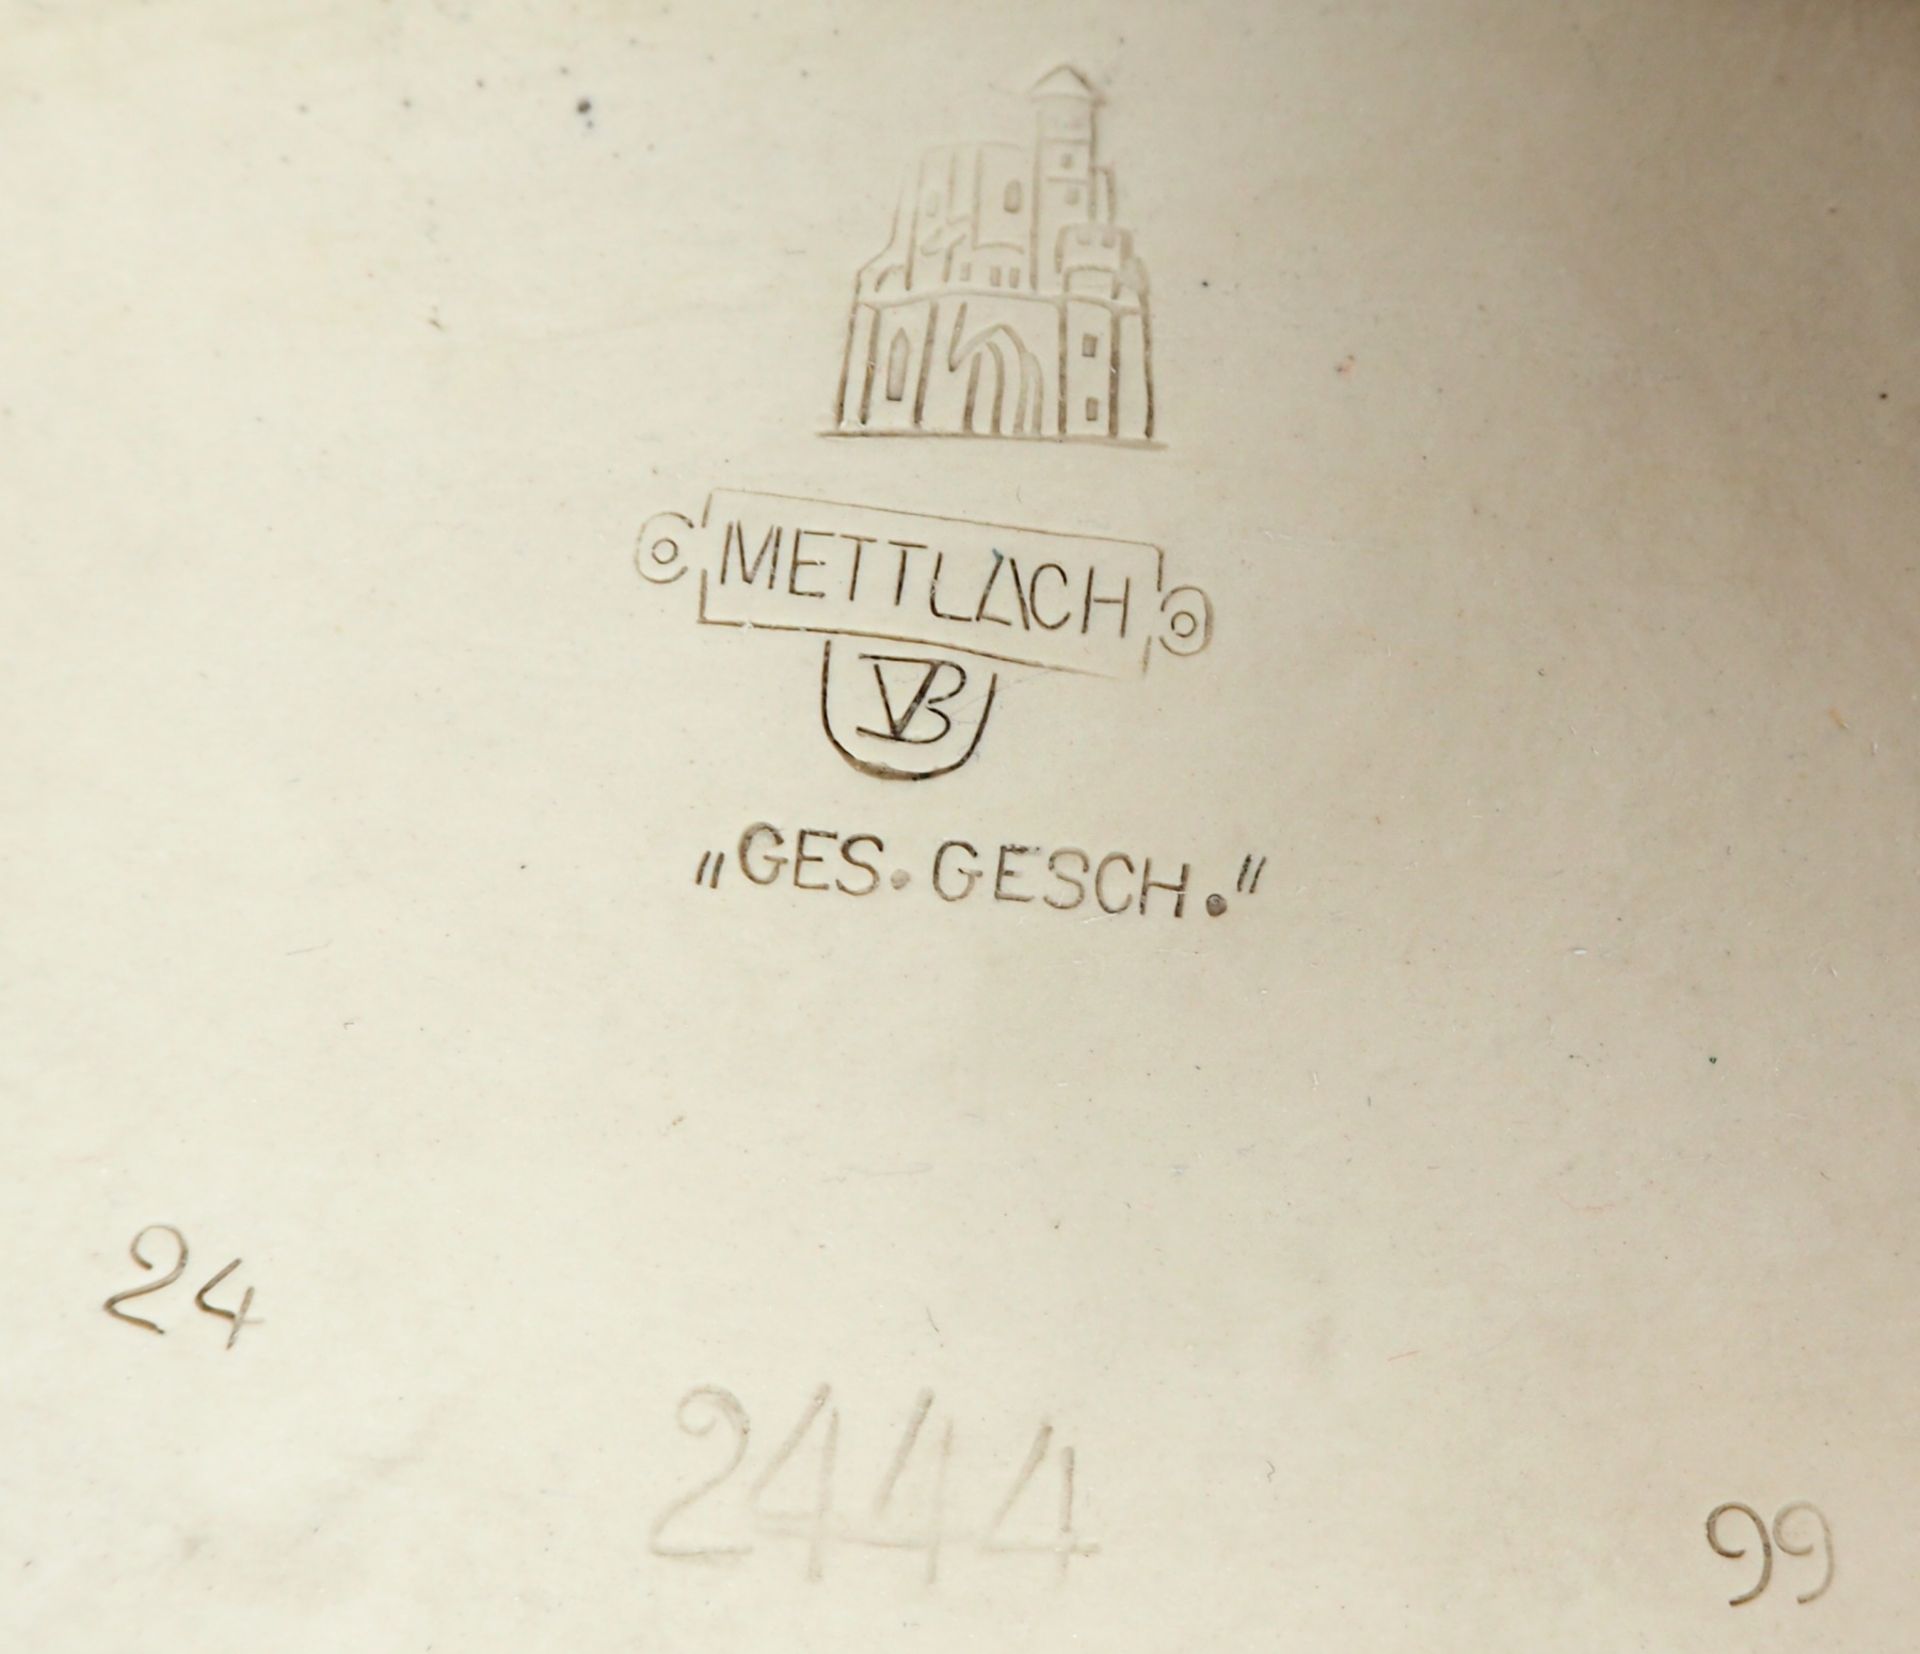 PHANOLITPLATTE, Villeroy & Boch/ Mettlach, 1899, - Image 2 of 2